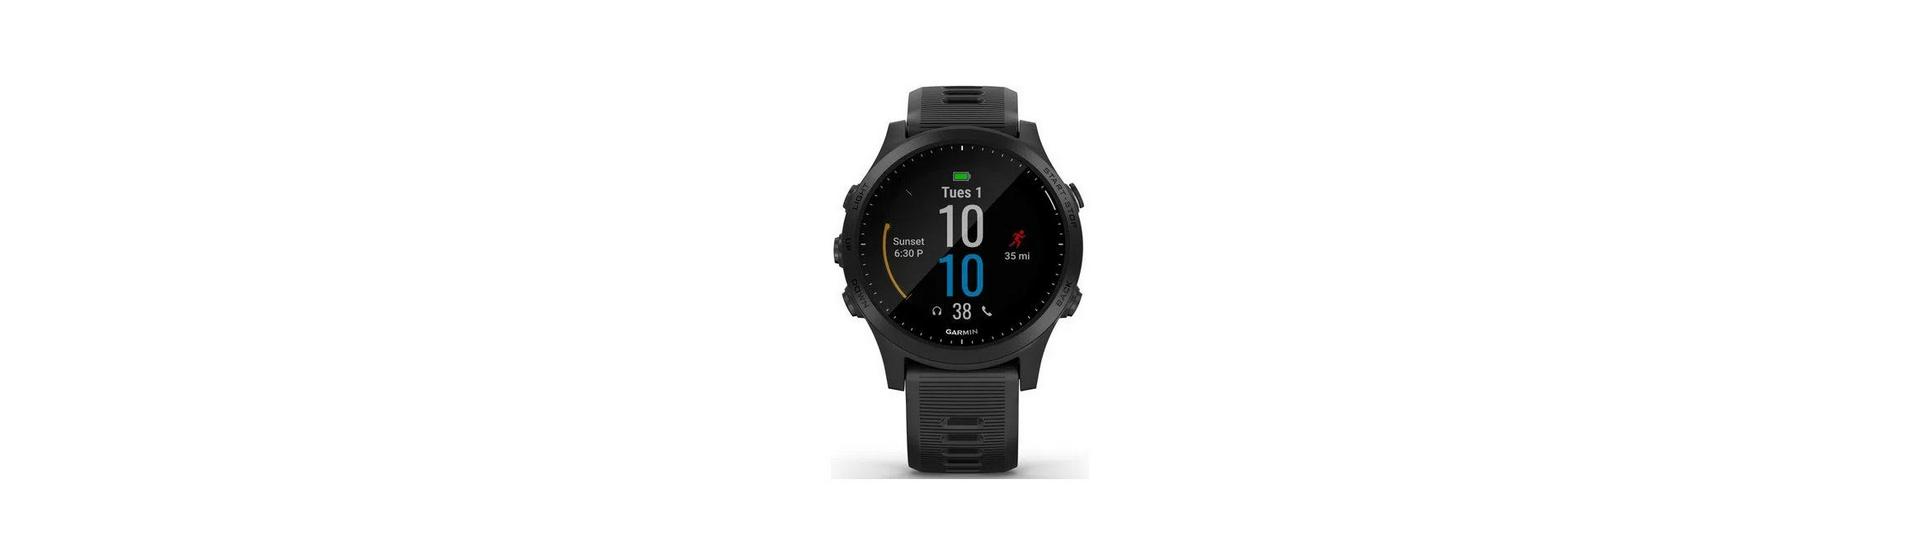 Capa do post: Promoção: Smartwatch Garmin Forerunner 945 GPS na Amazon